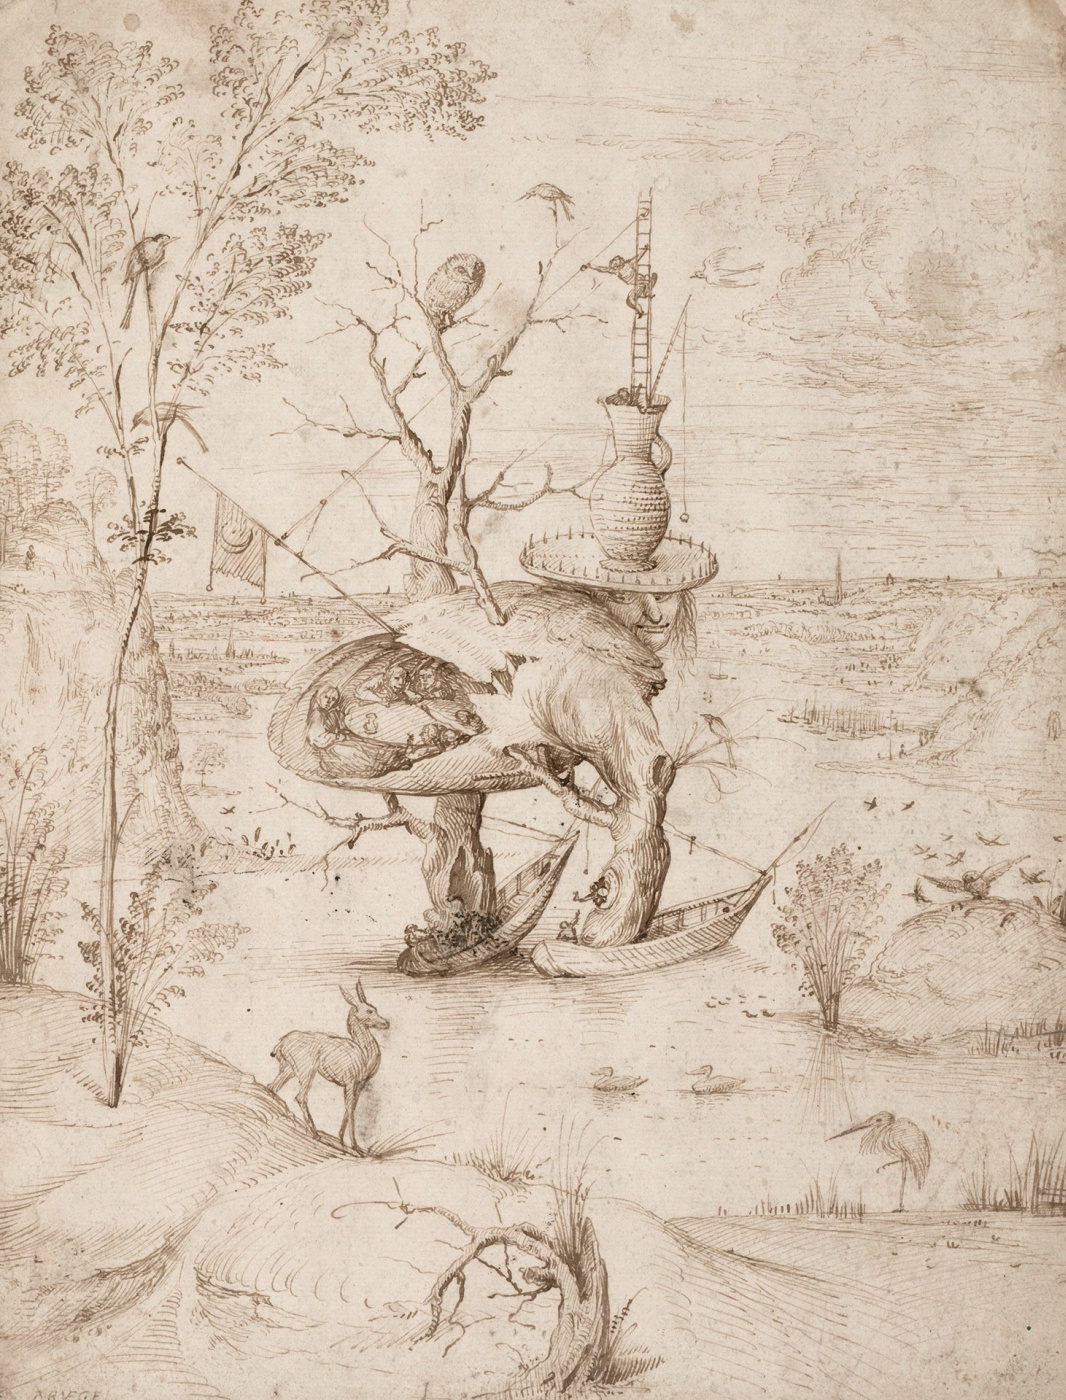 Hieronymus Bosch. Tree man